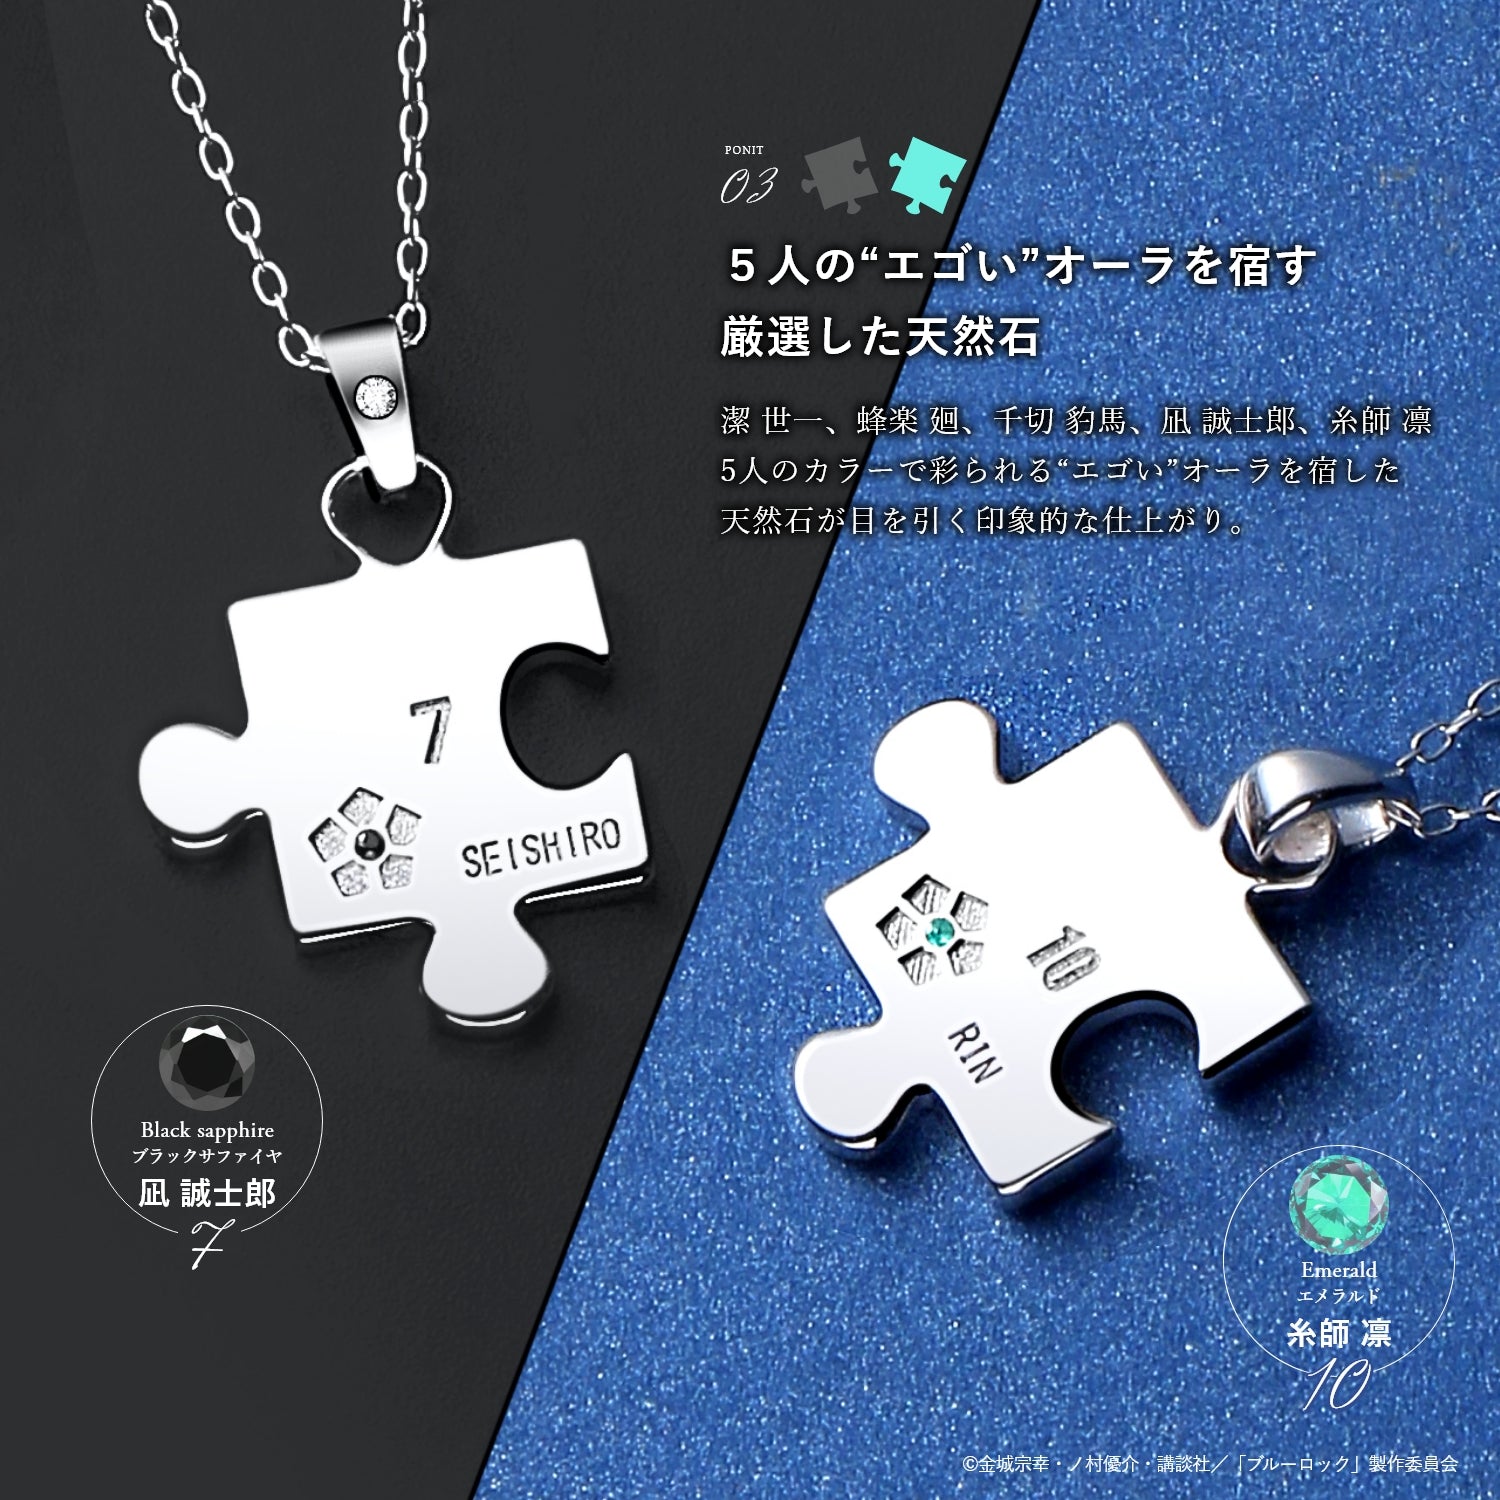 TV anime"BLUELOCK"Silver Puzzle Necklace with Natural Diamonds Seishiro Nagi